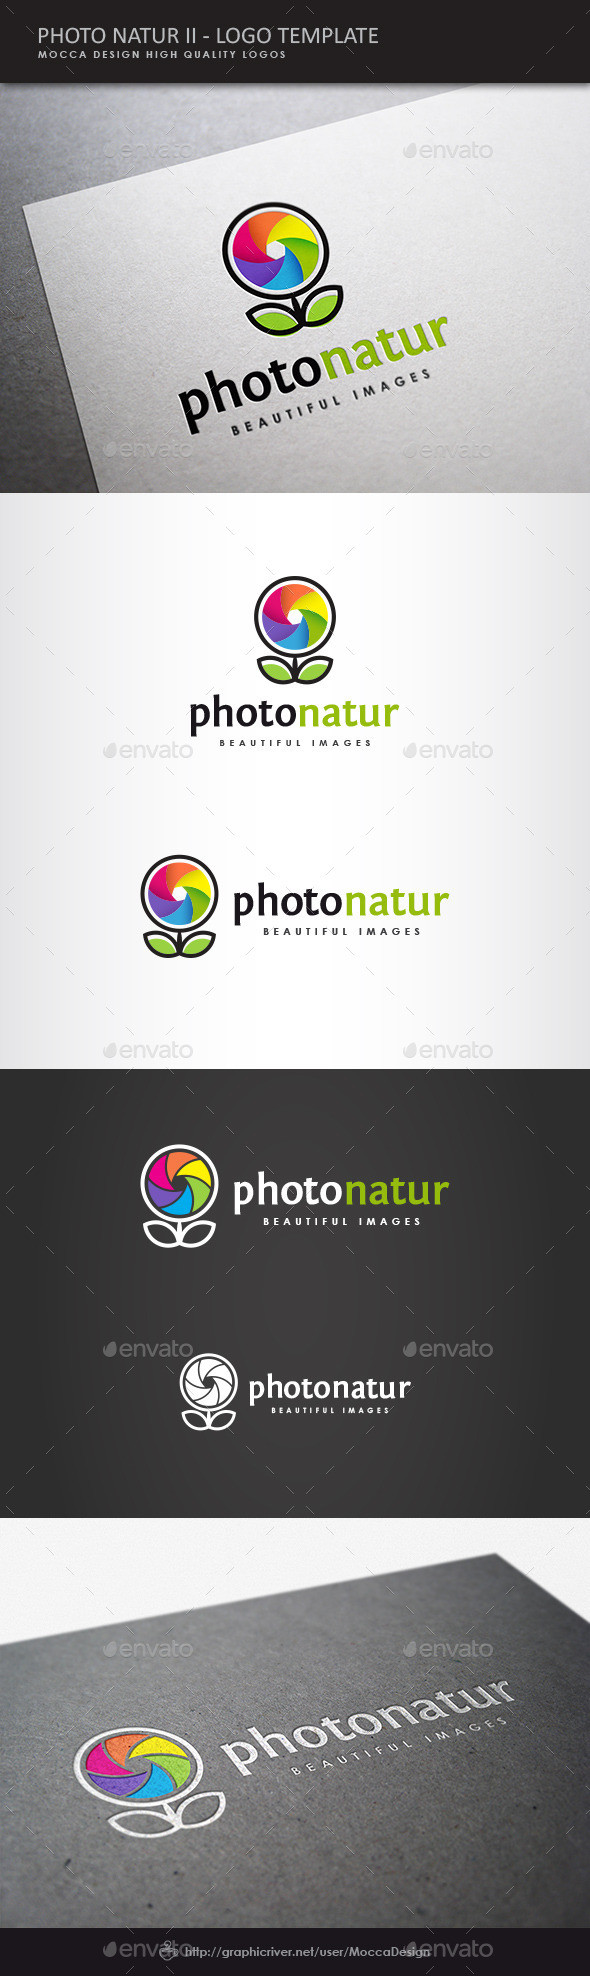 Preview photo natur ii logo mocca design